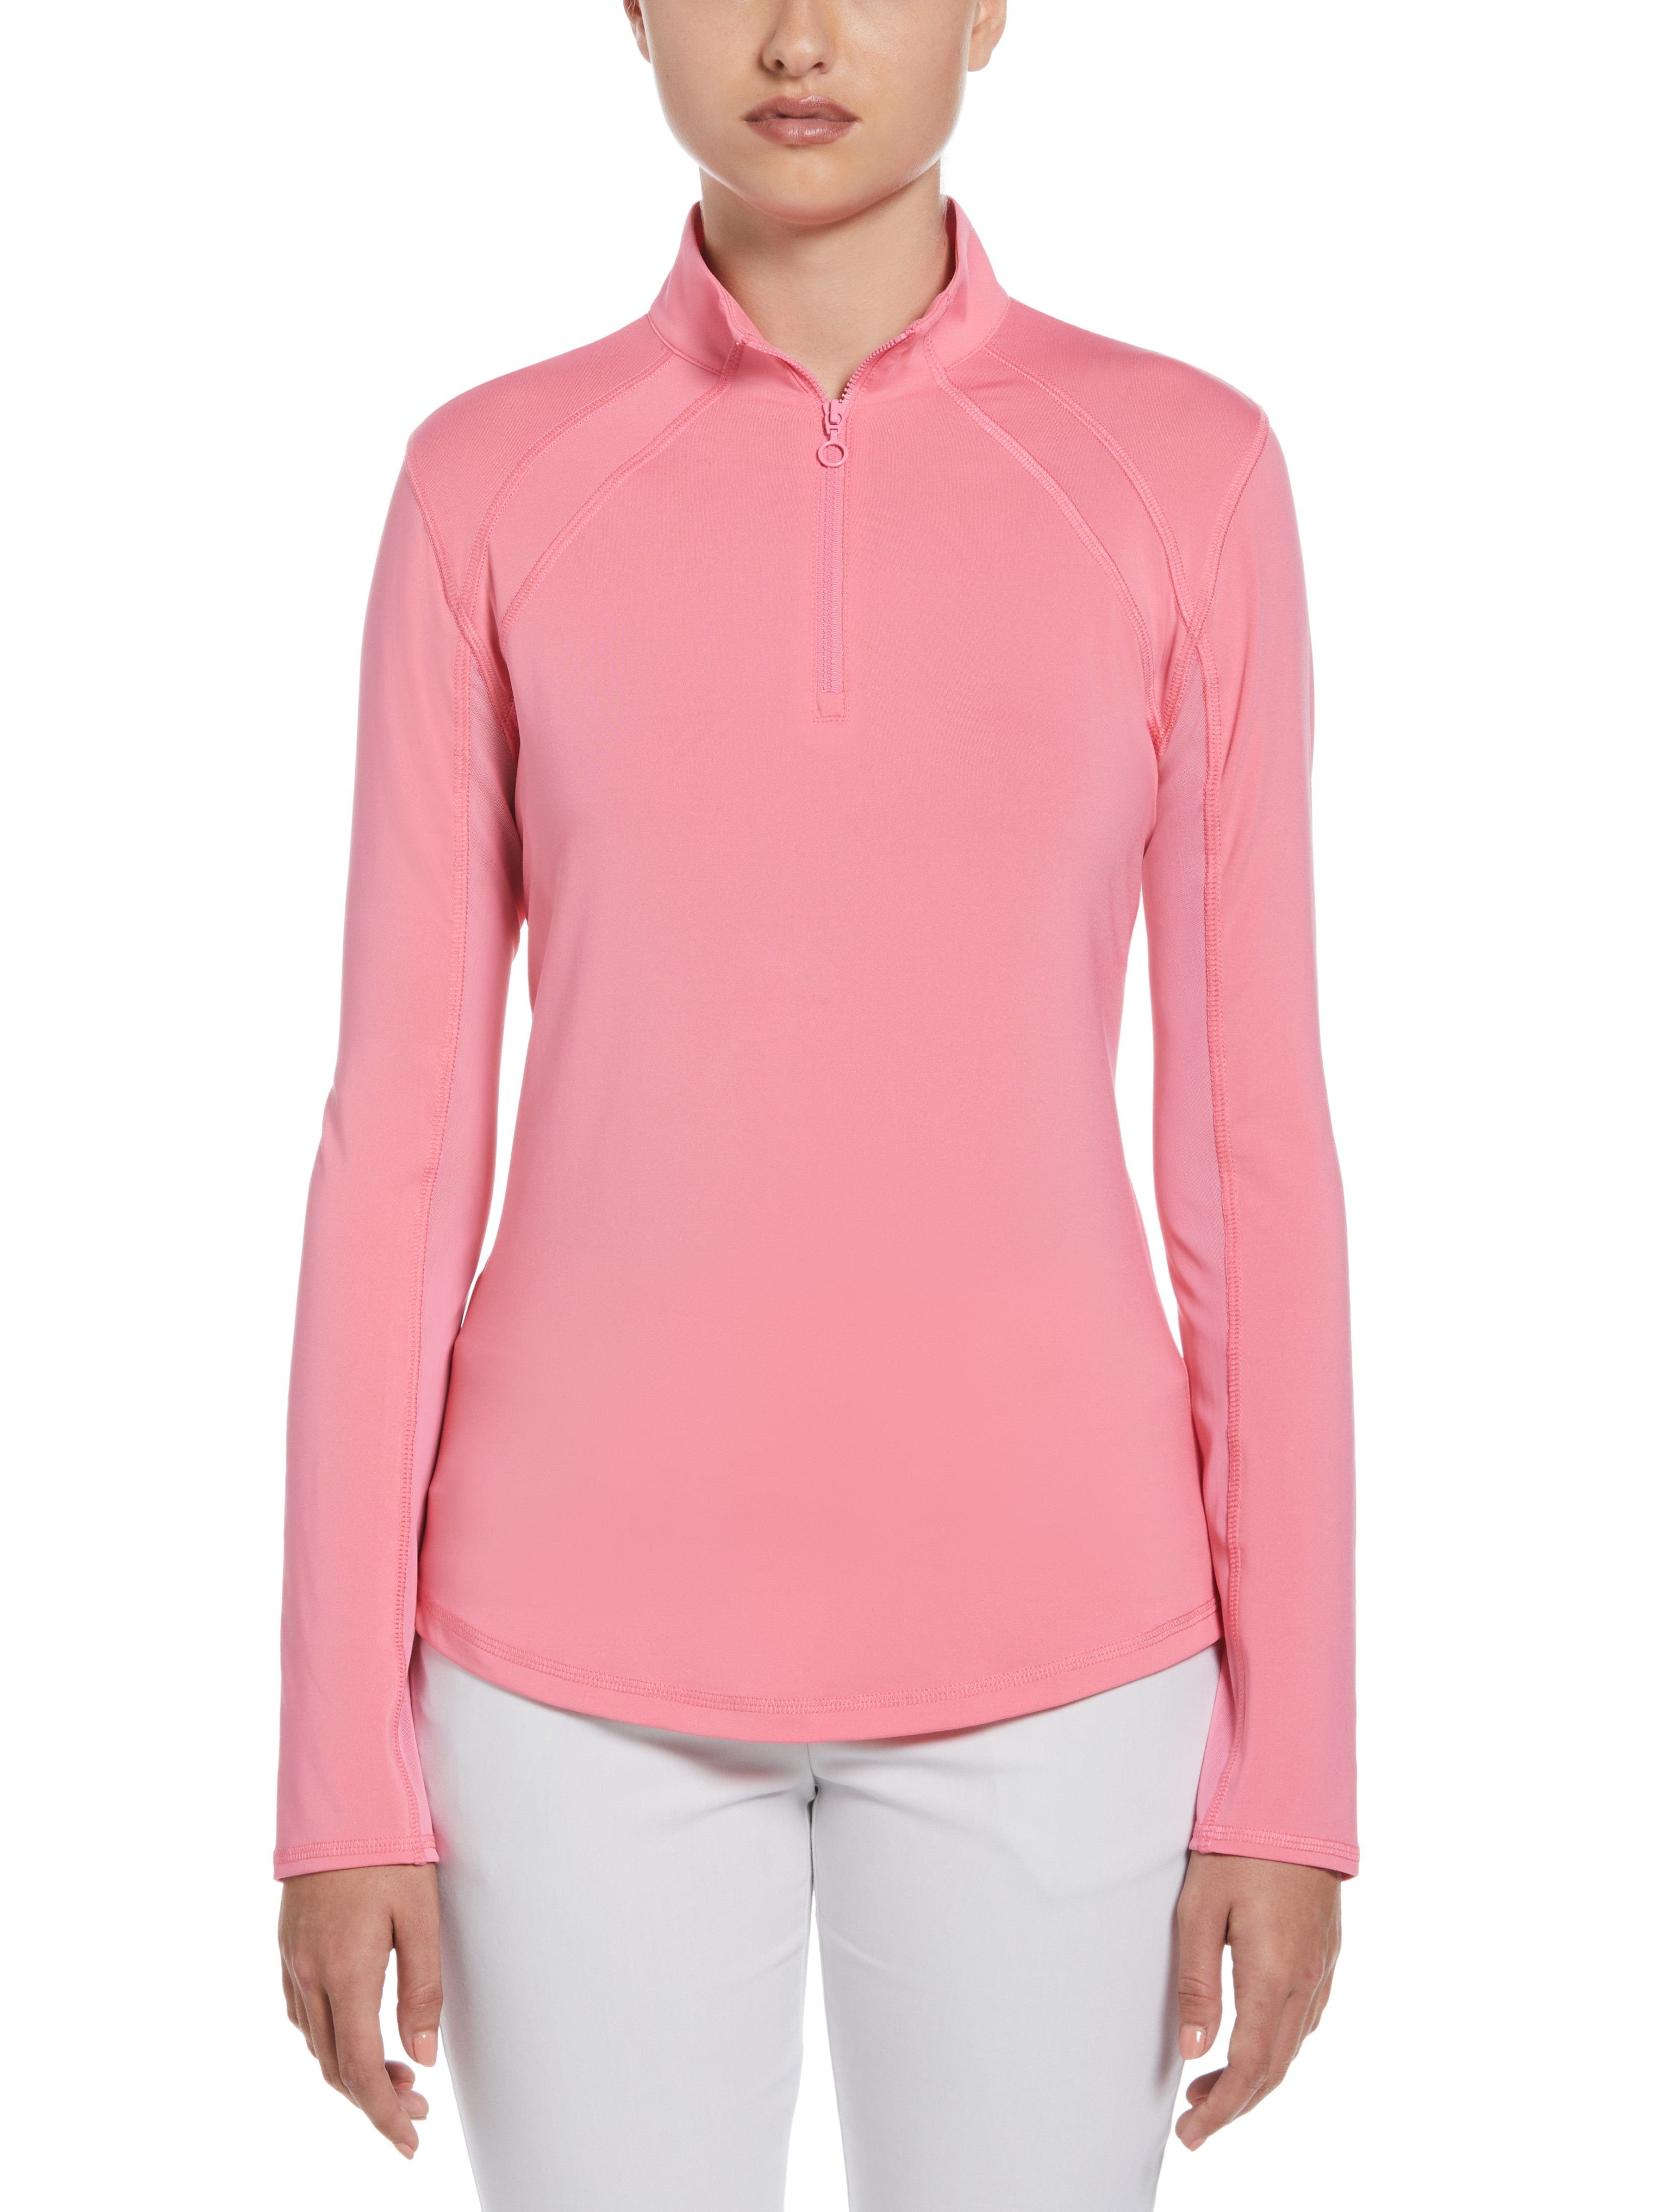 PGA TOUR Apparel Womens Sun Protection Golf Shirt w/ Mesh Panels, Size Medium, Flowering Ginger Pink, Polyester/Spandex | Golf Apparel Shop